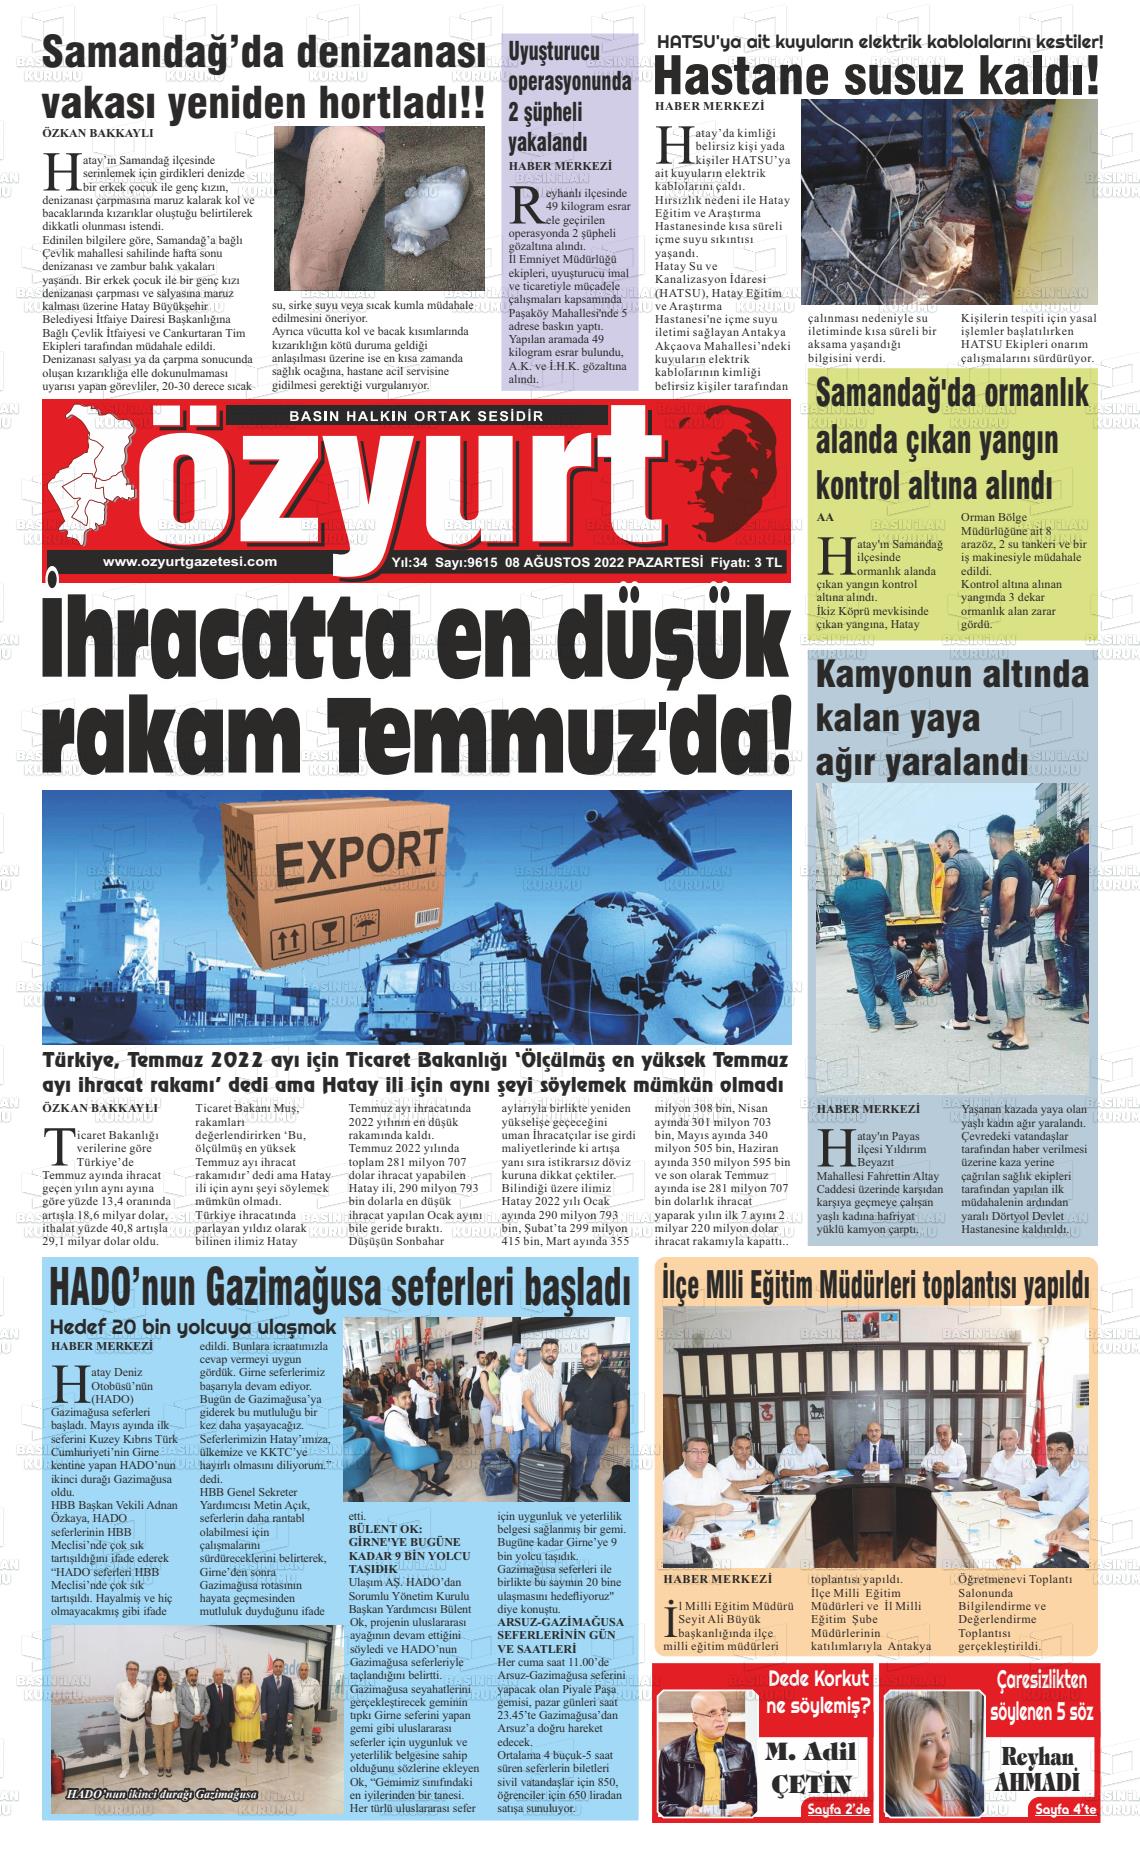 08 Ağustos 2022 Özyurt Gazete Manşeti